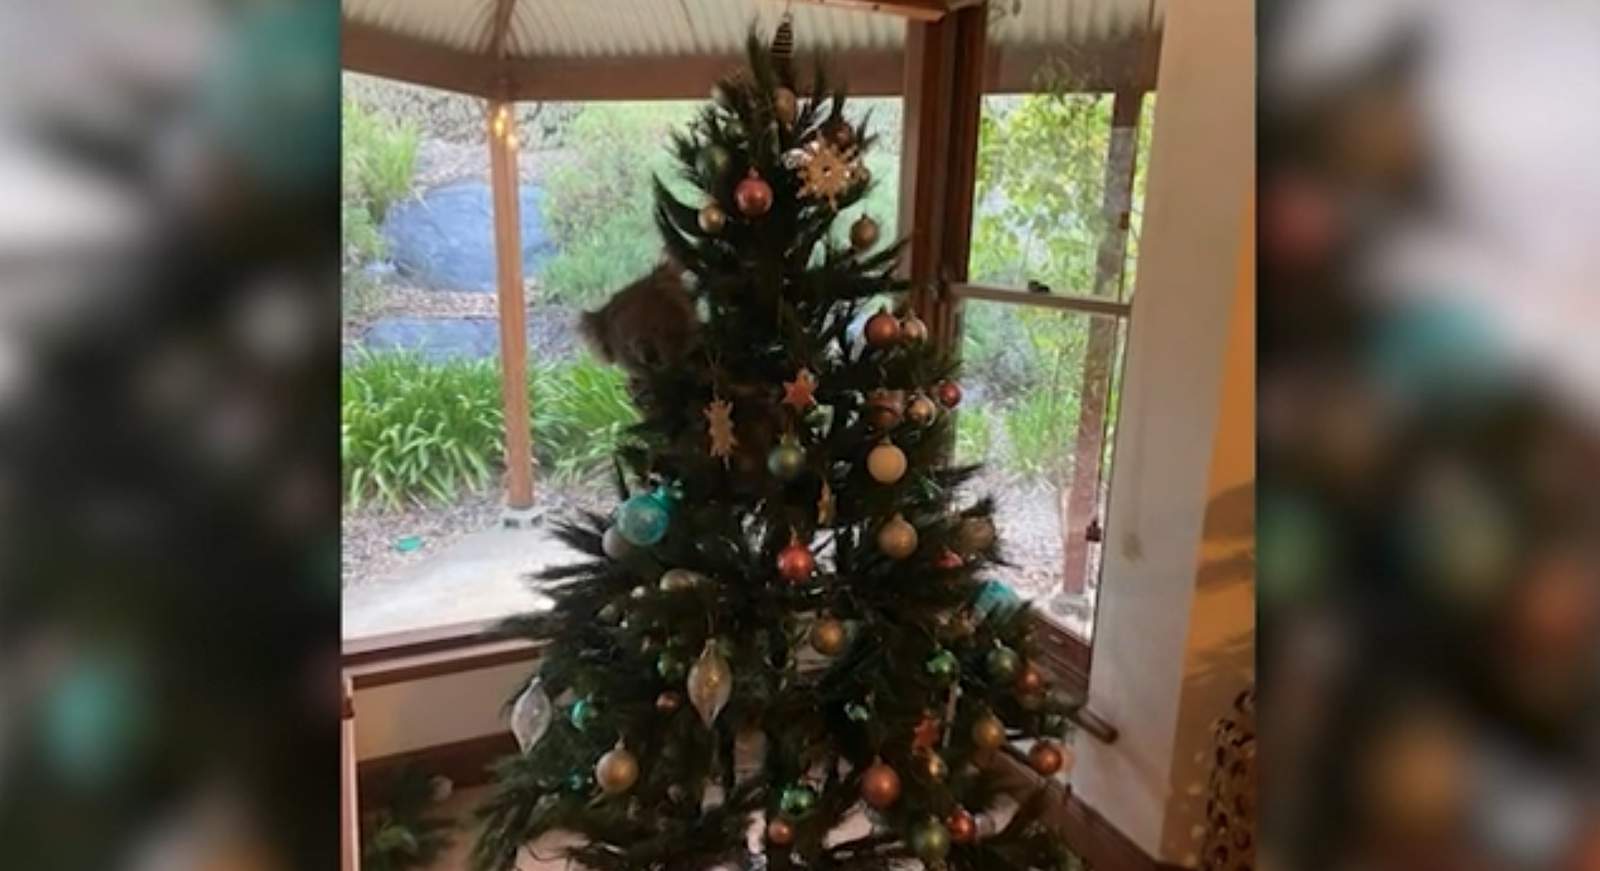 Surprise gift: Curious Koala sneaks into home, climbs Christmas tree